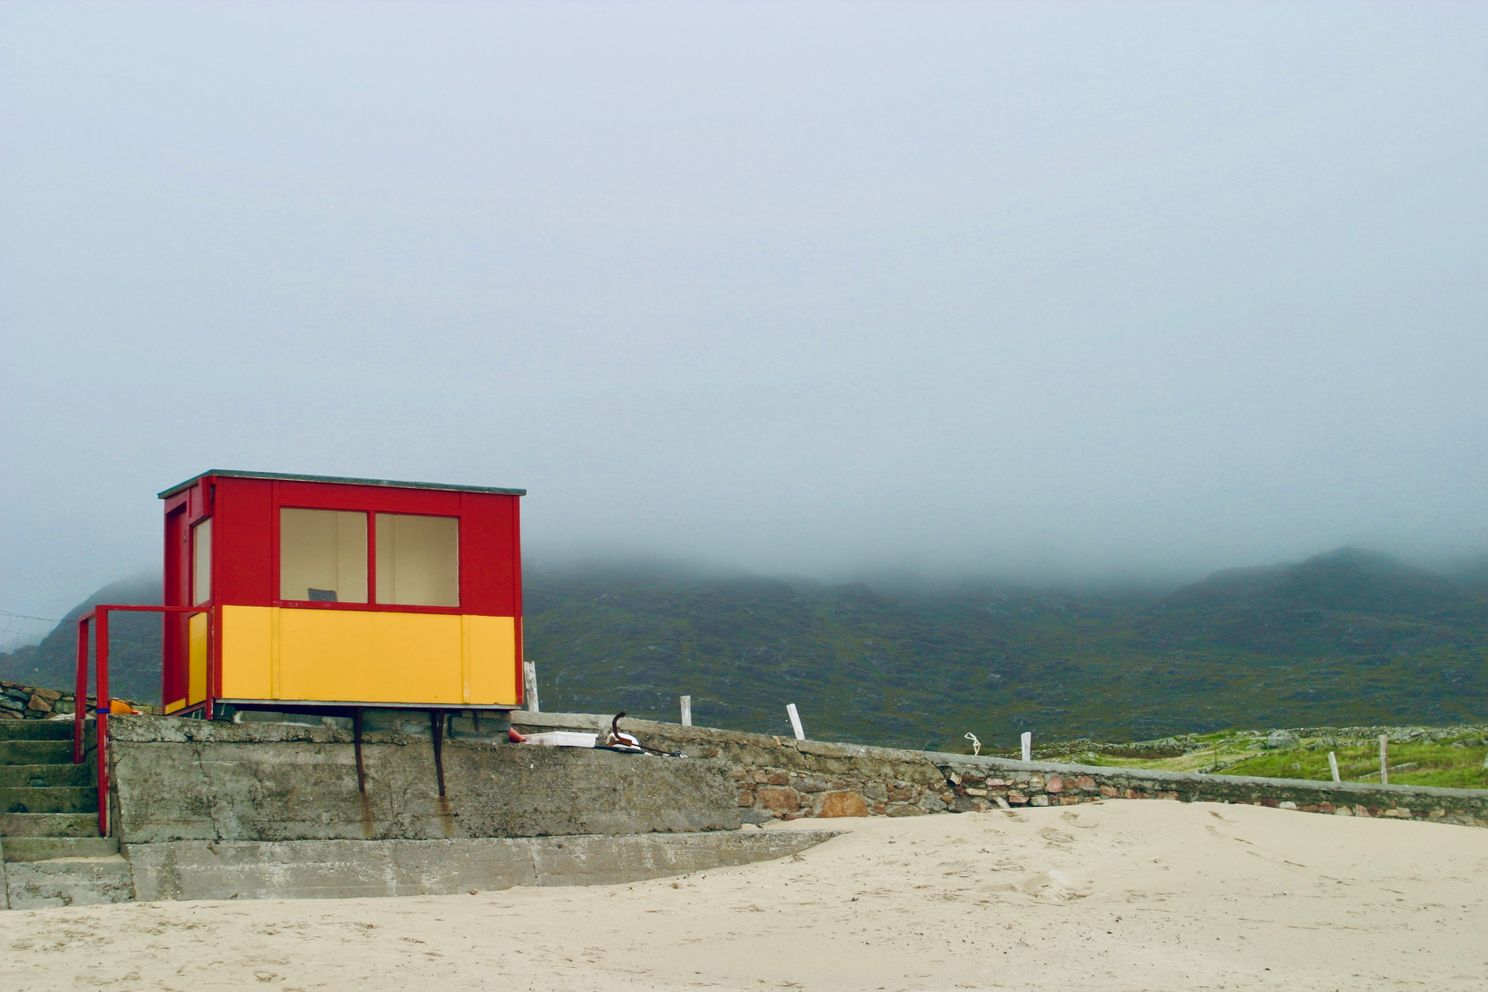 Red & yellow coast guard hut, sandy beach, cloudy sky, Galway Ireland